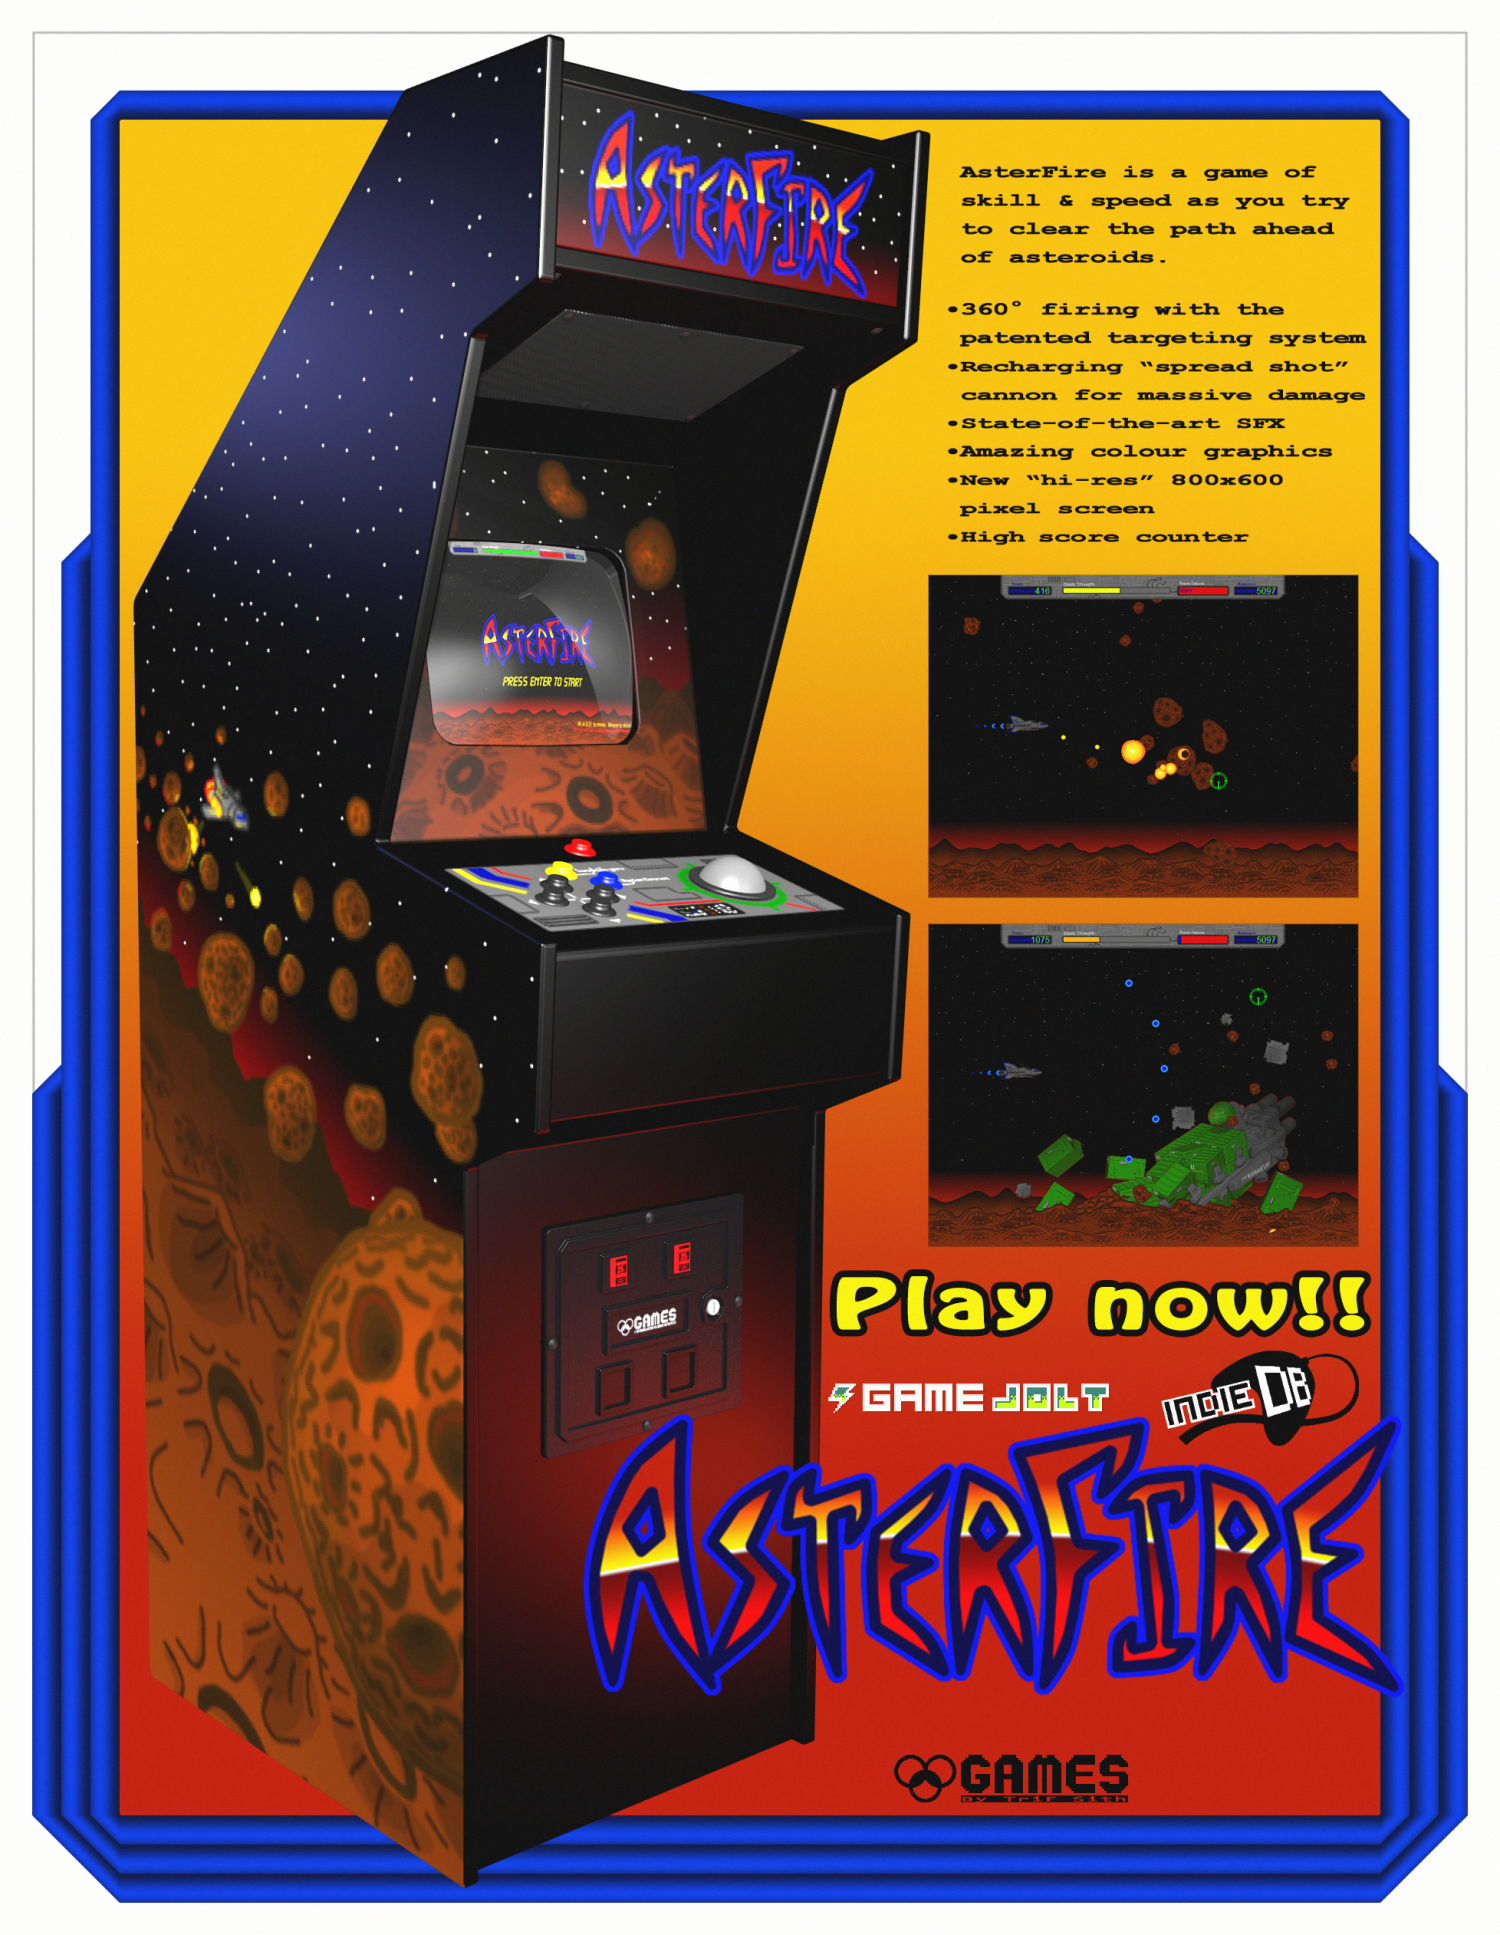 3D Arcade Cabinet AsterFire model